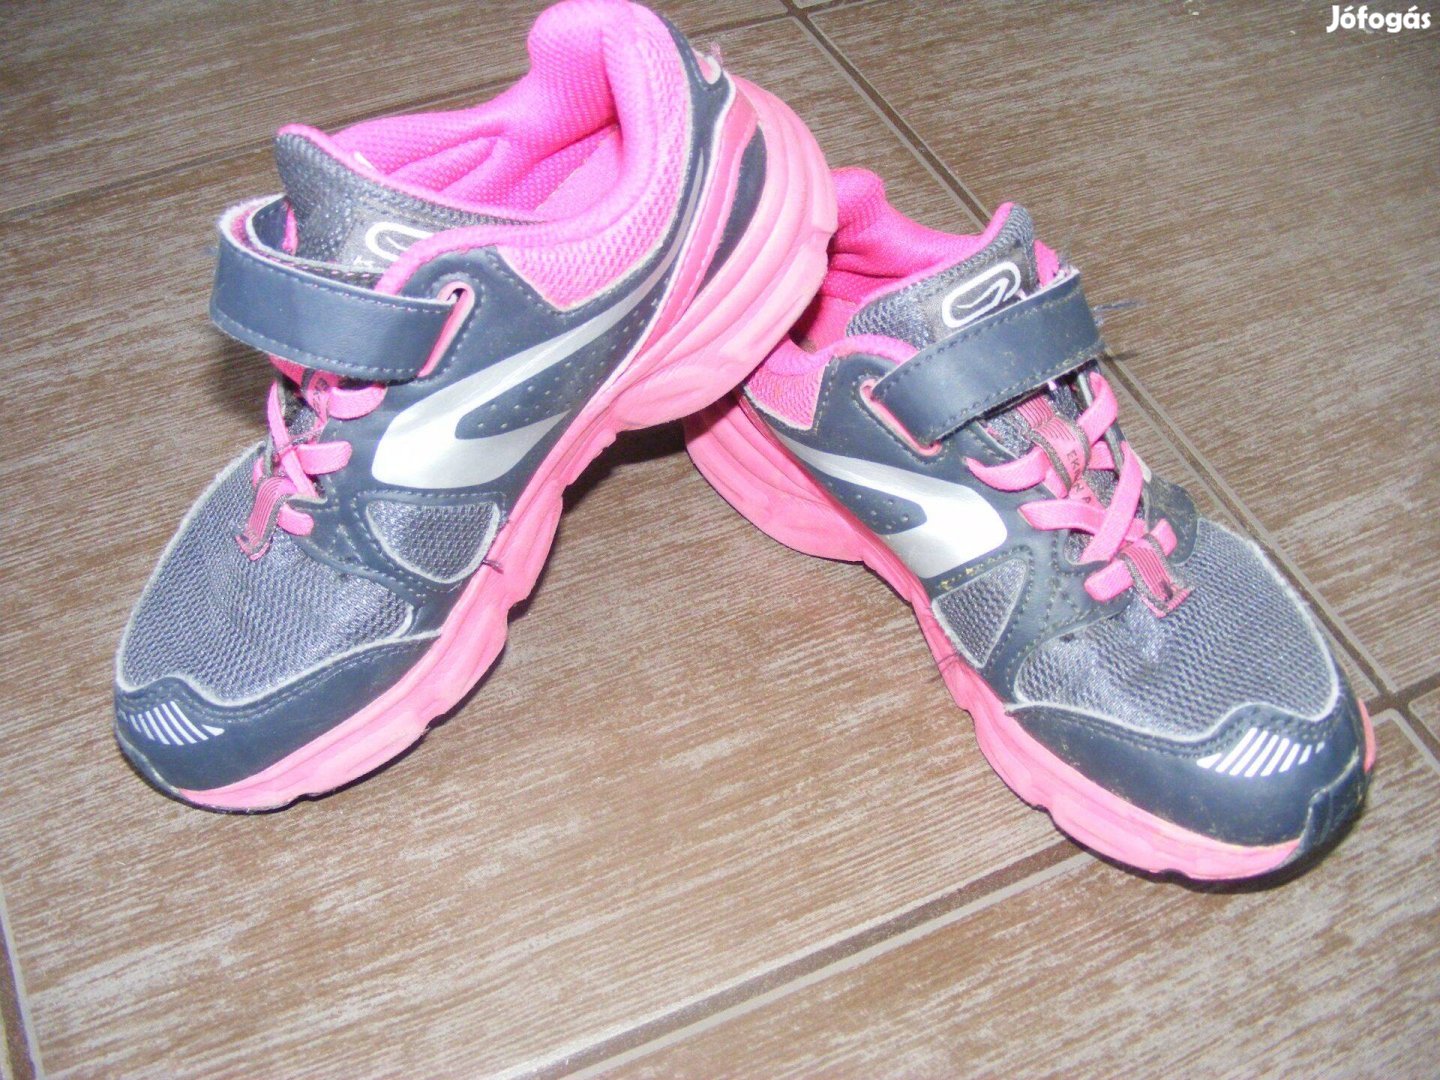 Fekete / rózsaszín sportcipő, 30-as, bth 19,0 cm